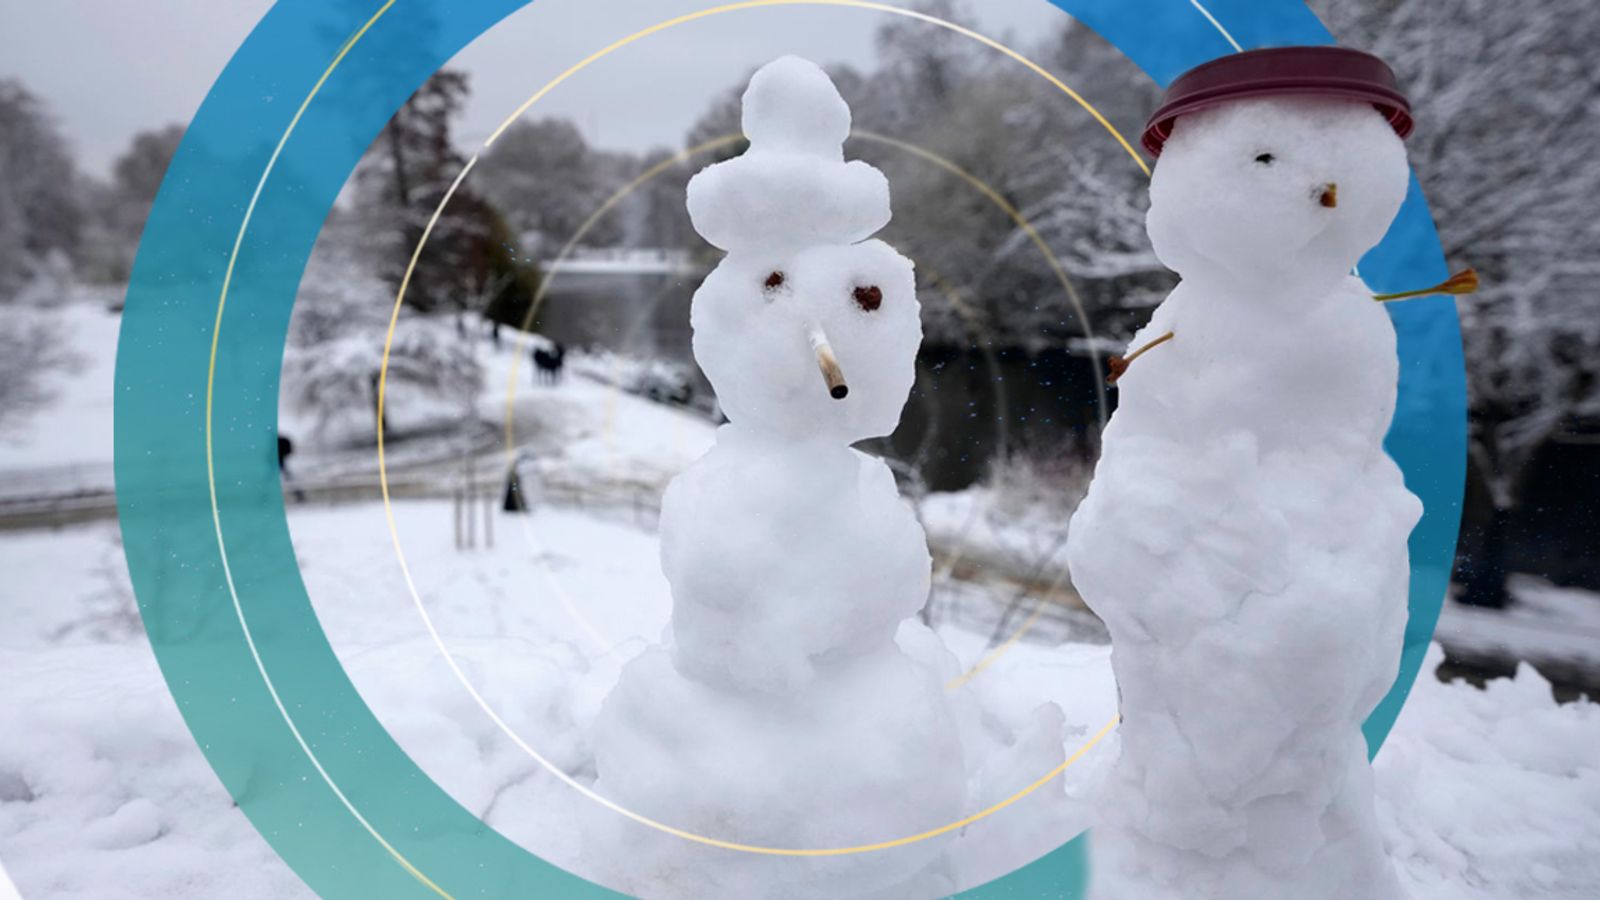 https://e3.365dm.com/22/12/1600x900/skynews-snow-cold-weather-snowman_5994496.jpg?20221212142121